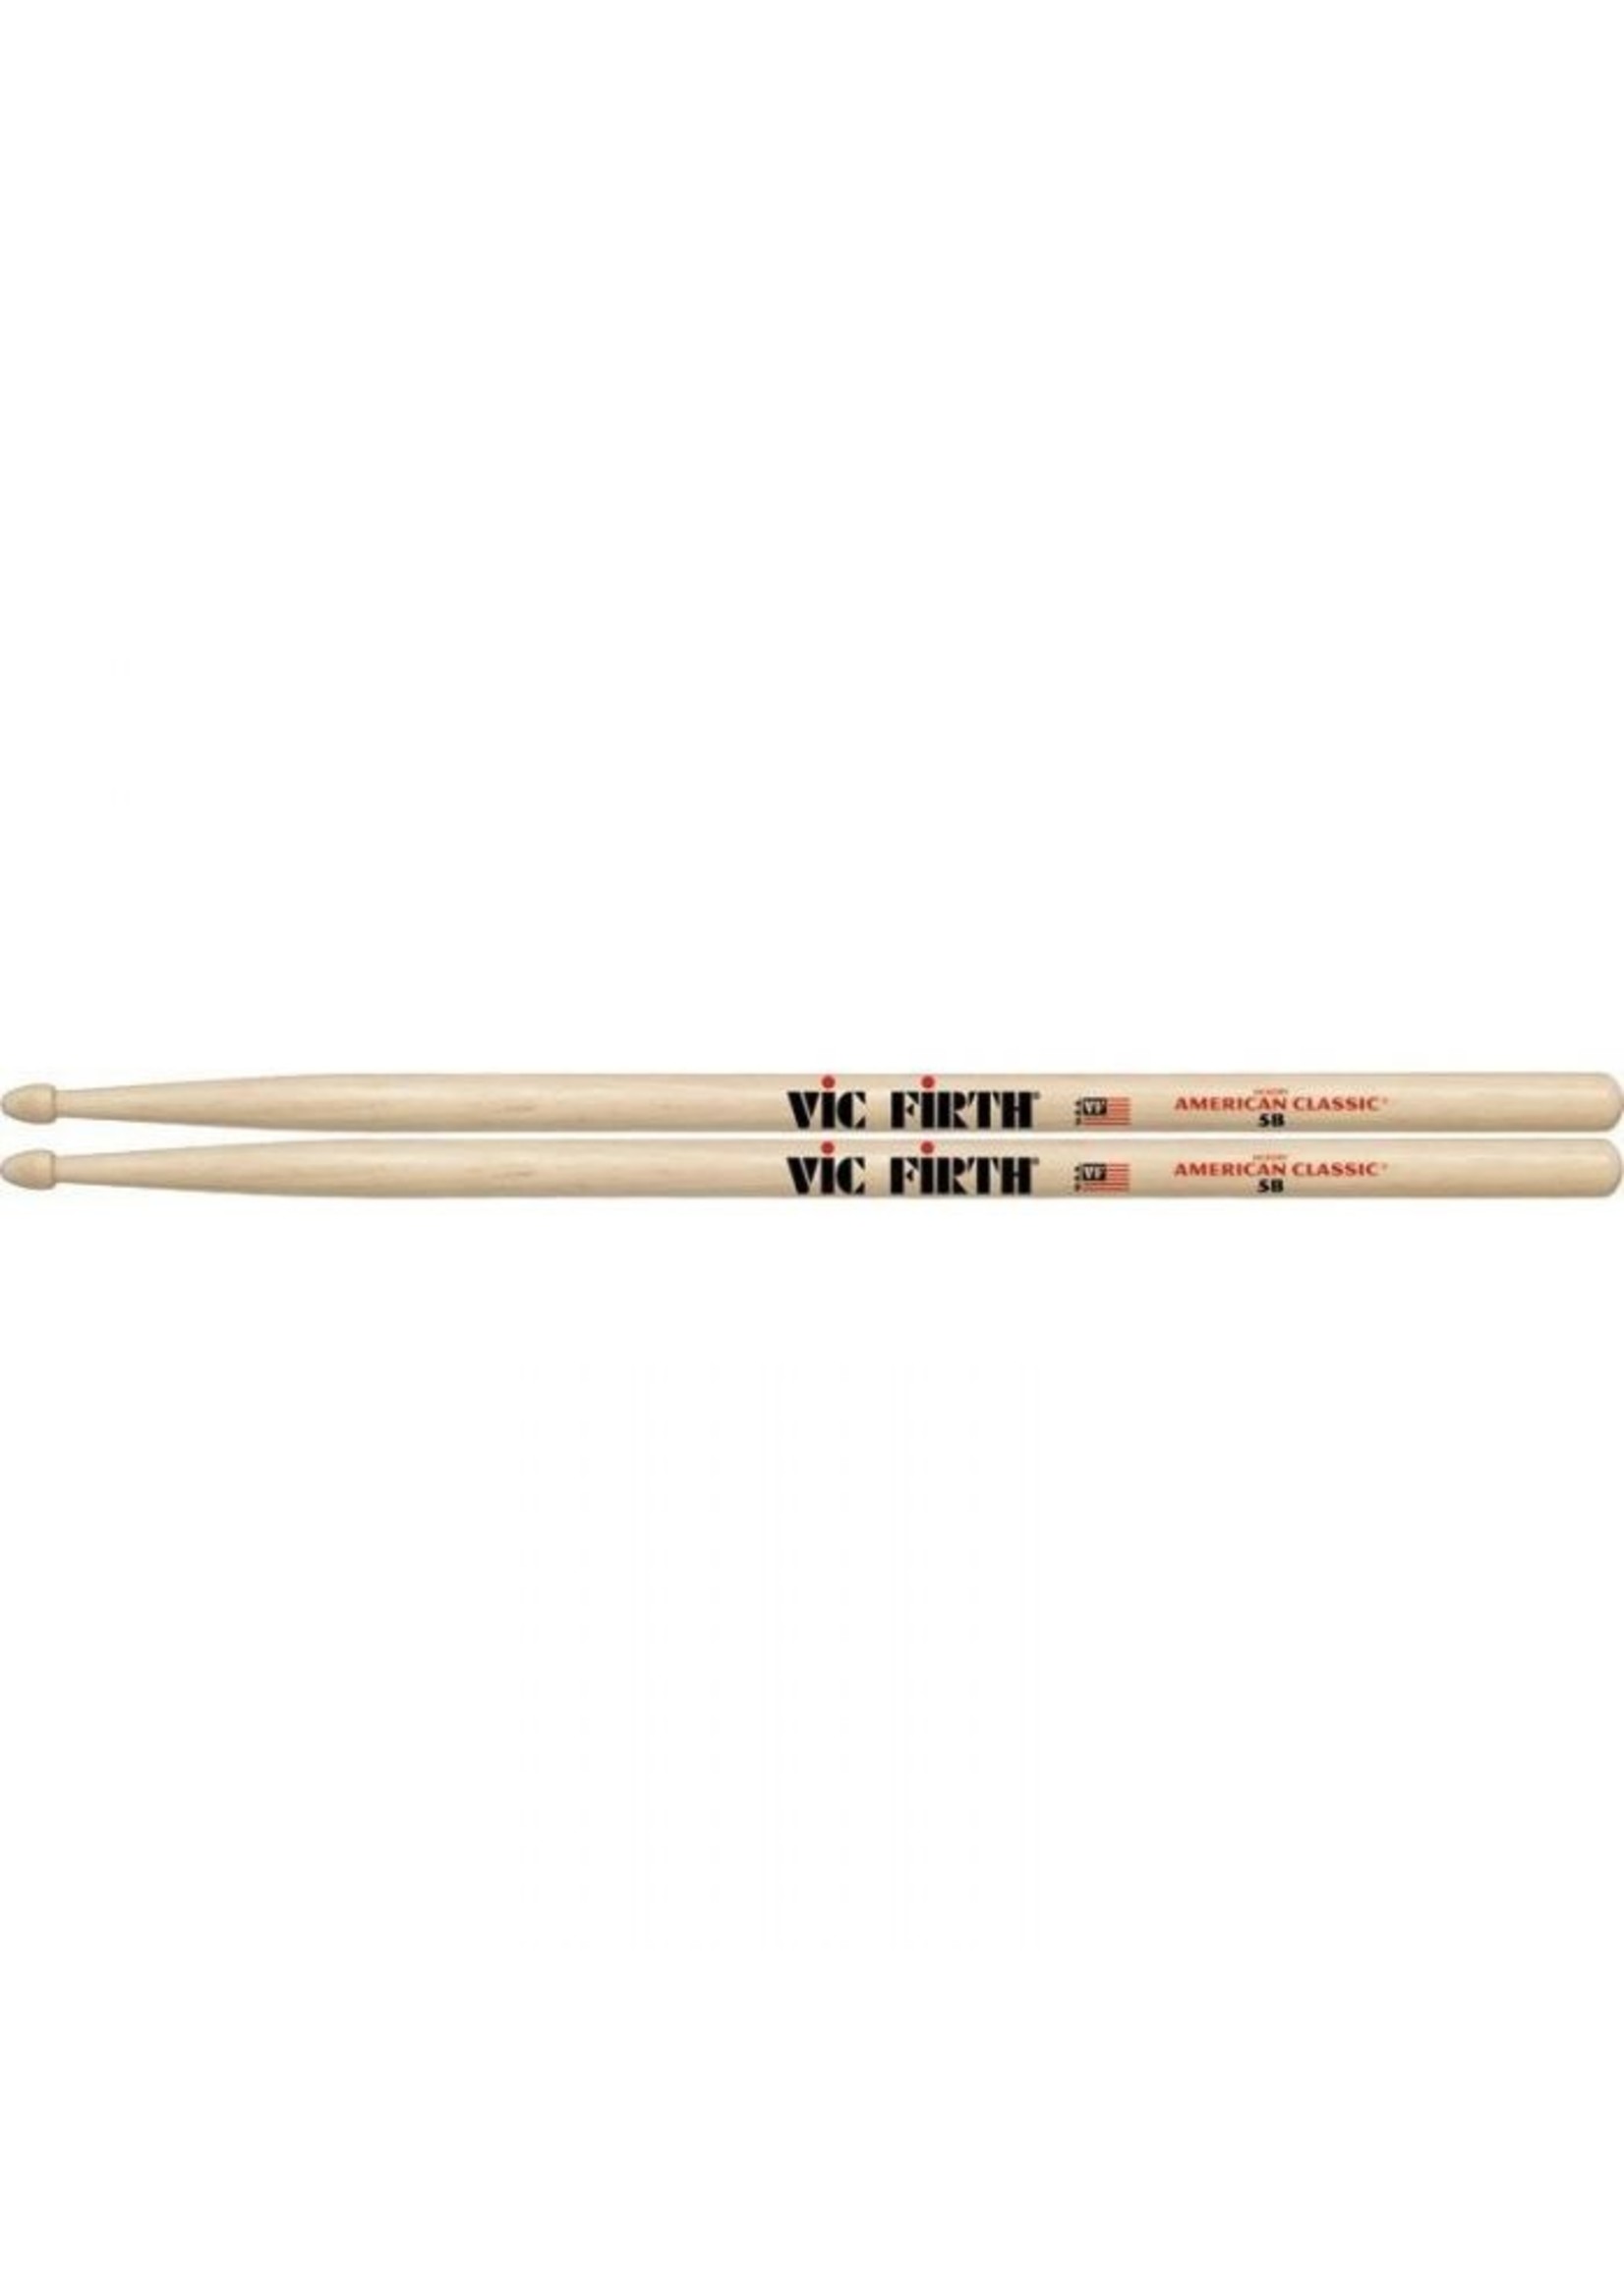 Vic Firth Vic Firth American Classic 5B Hickory Drumsticks